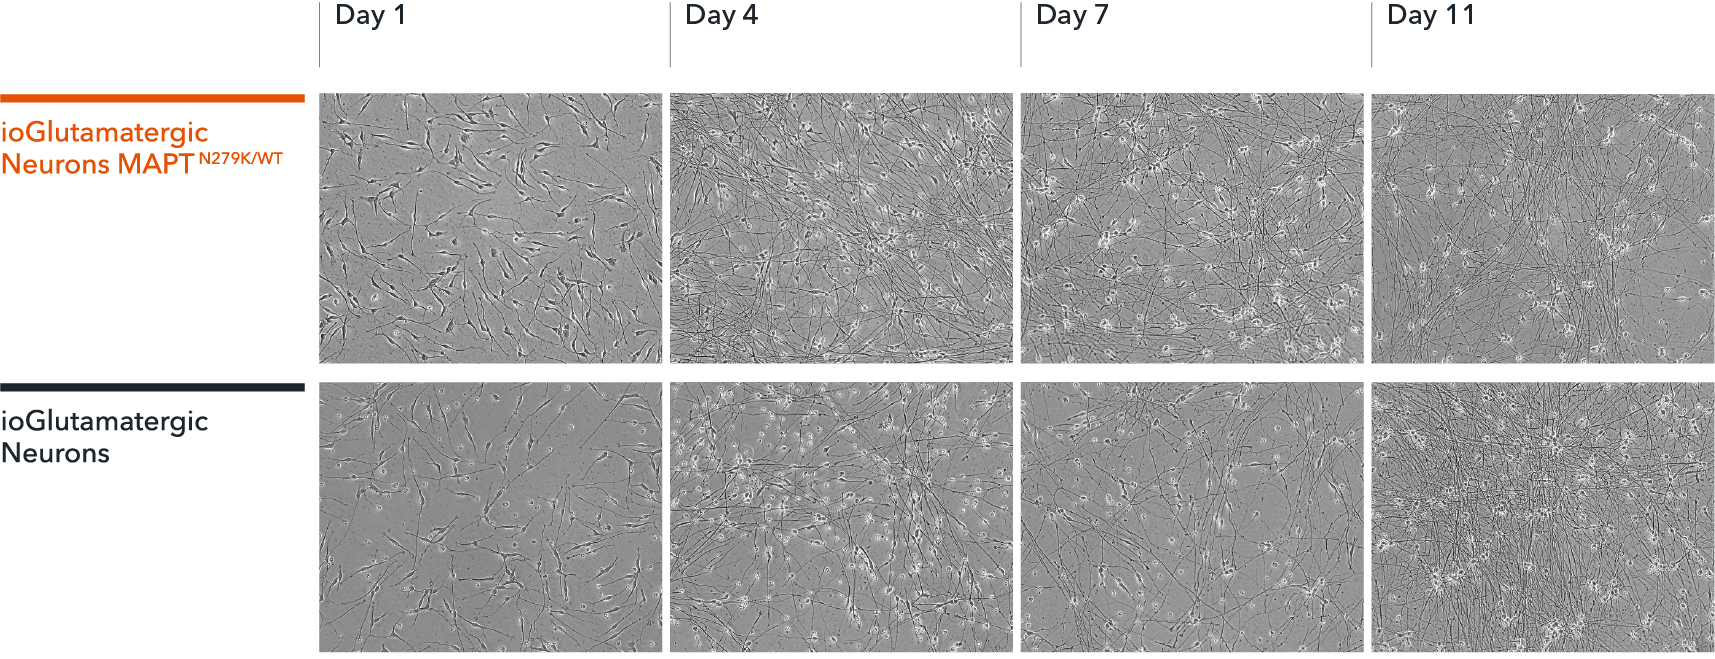 ioGlutamatergic_neurons-MAPT-N279K-WT-Morphology compressed